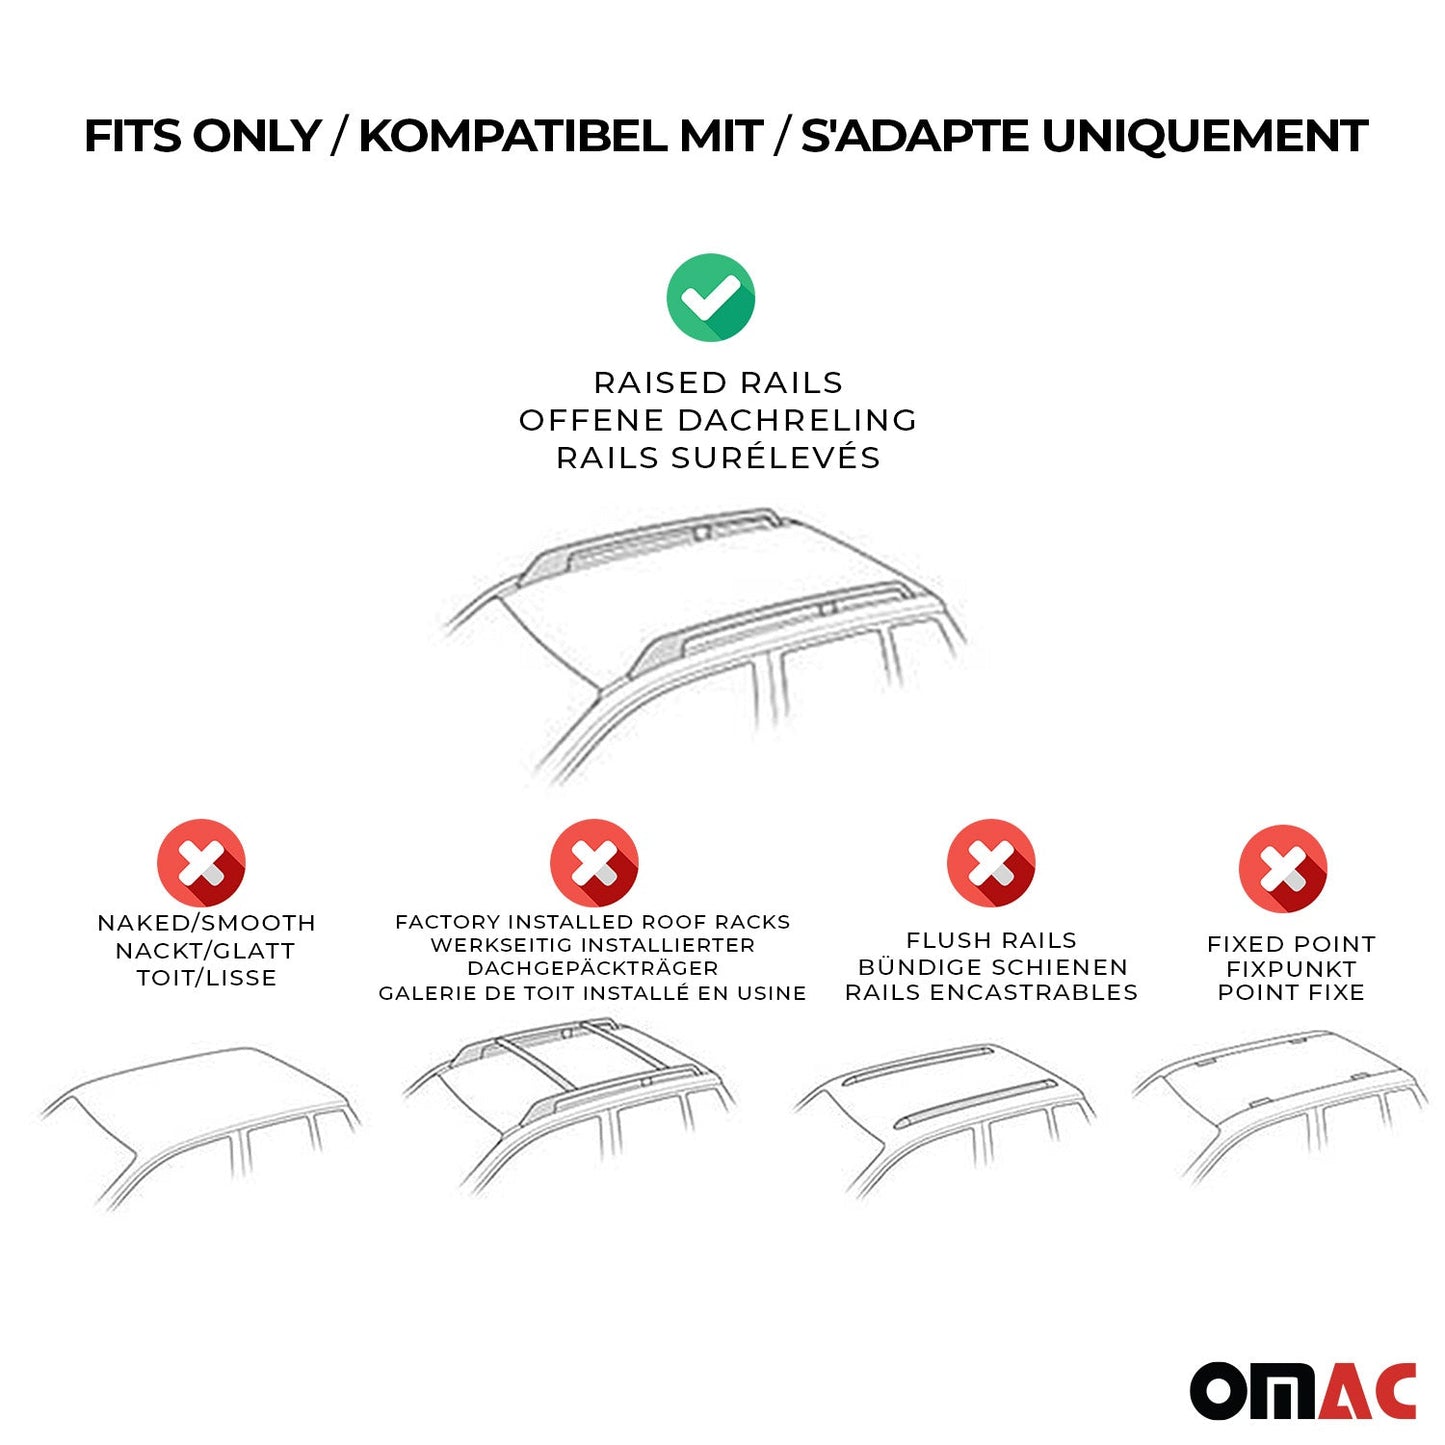 OMAC Roof Rack Cross Bars Lockable for Toyota RAV4 2006-2012 Gray 2Pcs U004407